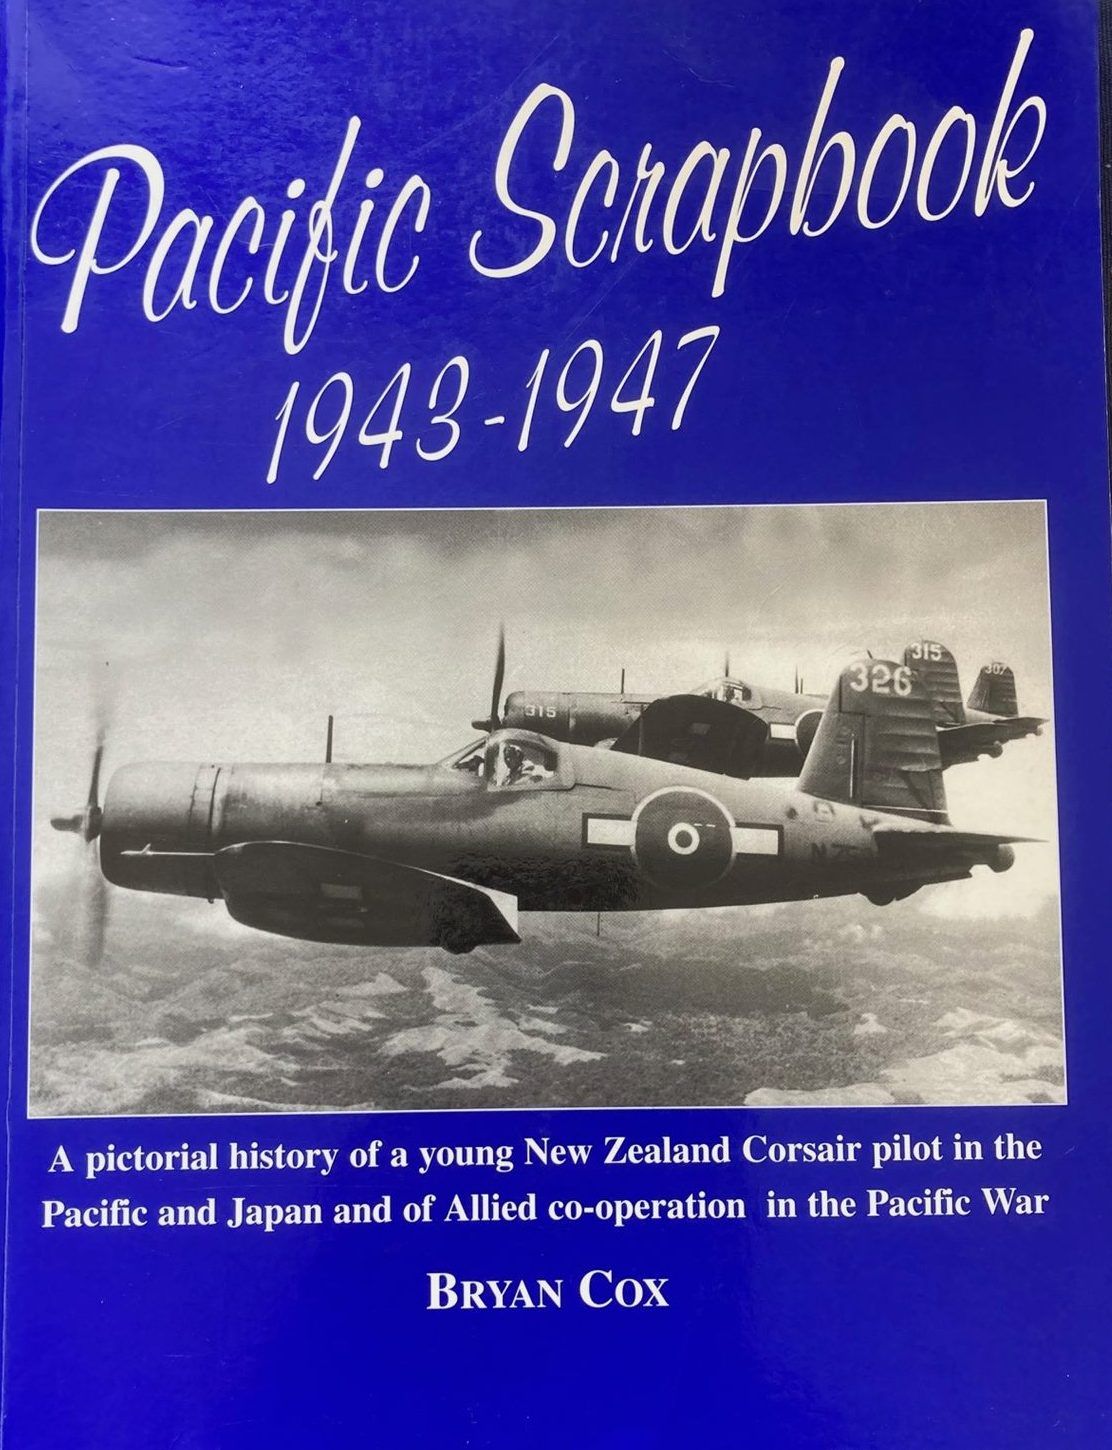 PACIFIC SCRAPBOOK 1943 - 1947: History of a young Corsair pilot